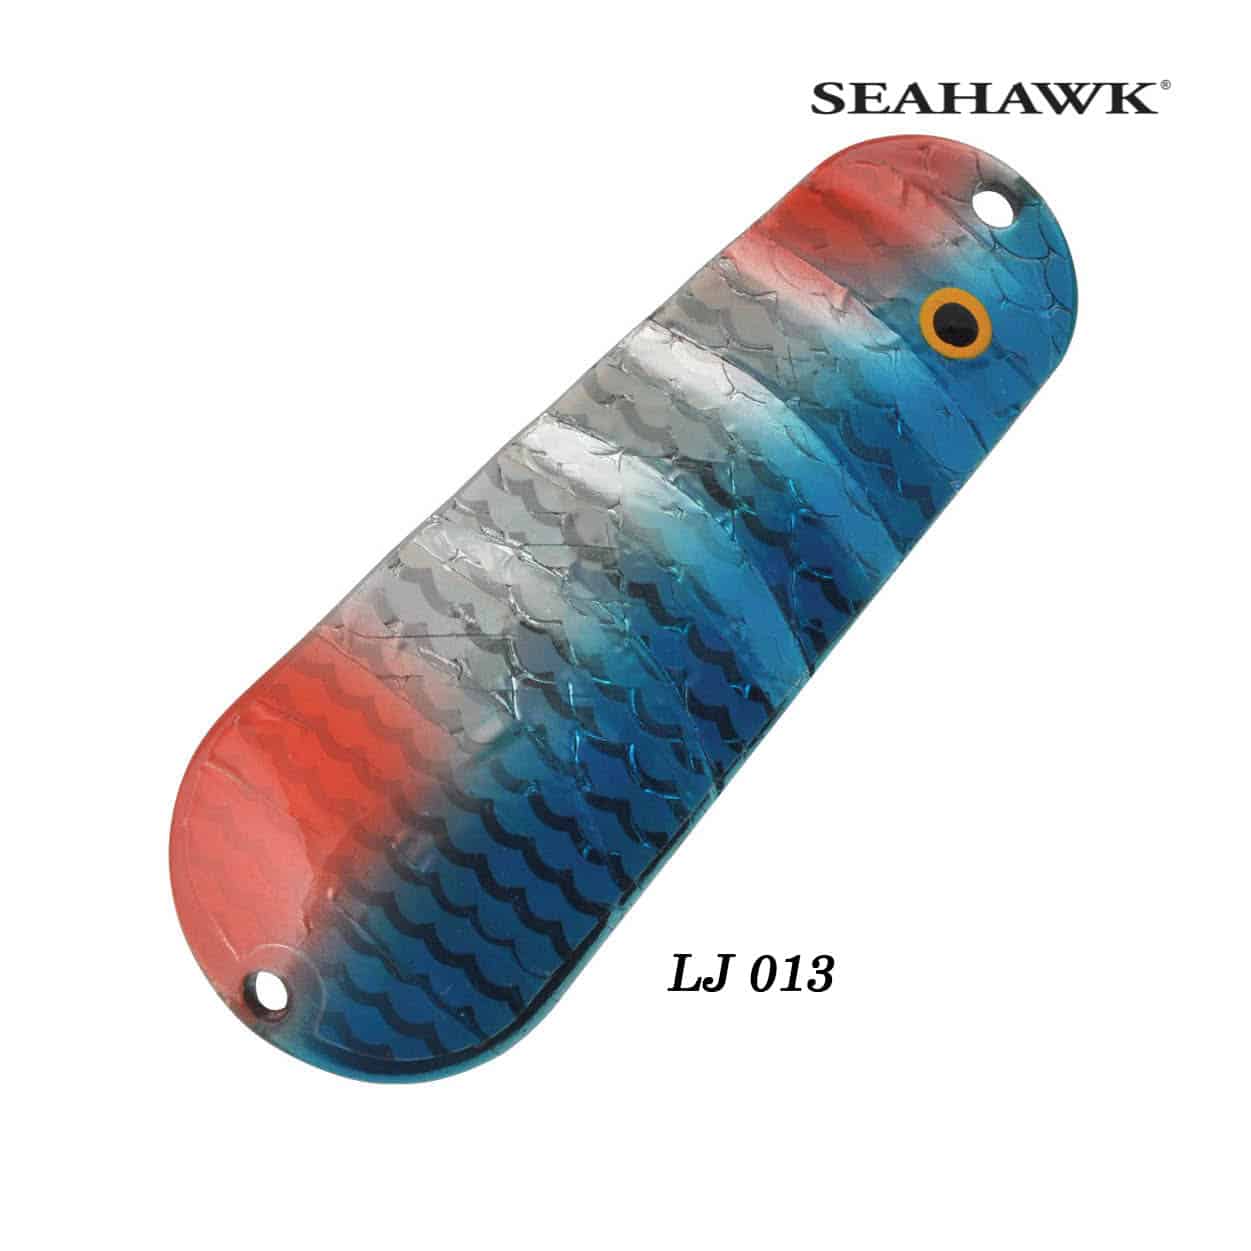 SEAHAWK เหยื่อสปูน - รุ่น 3016 ATOM 02,20g LJ013